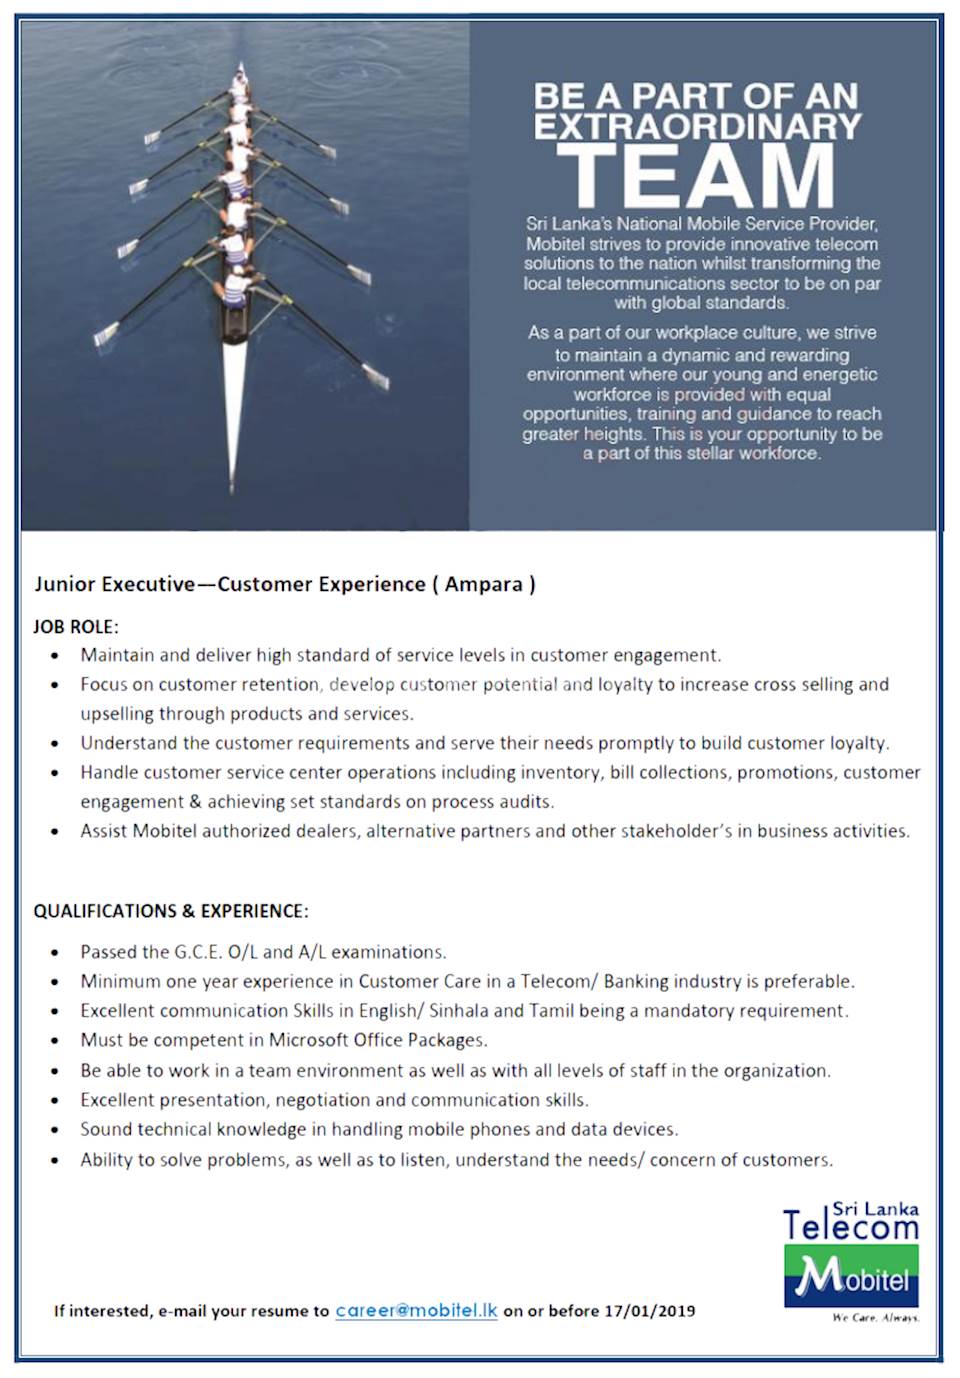 Junior Executive - Customer Experience (Ampara)